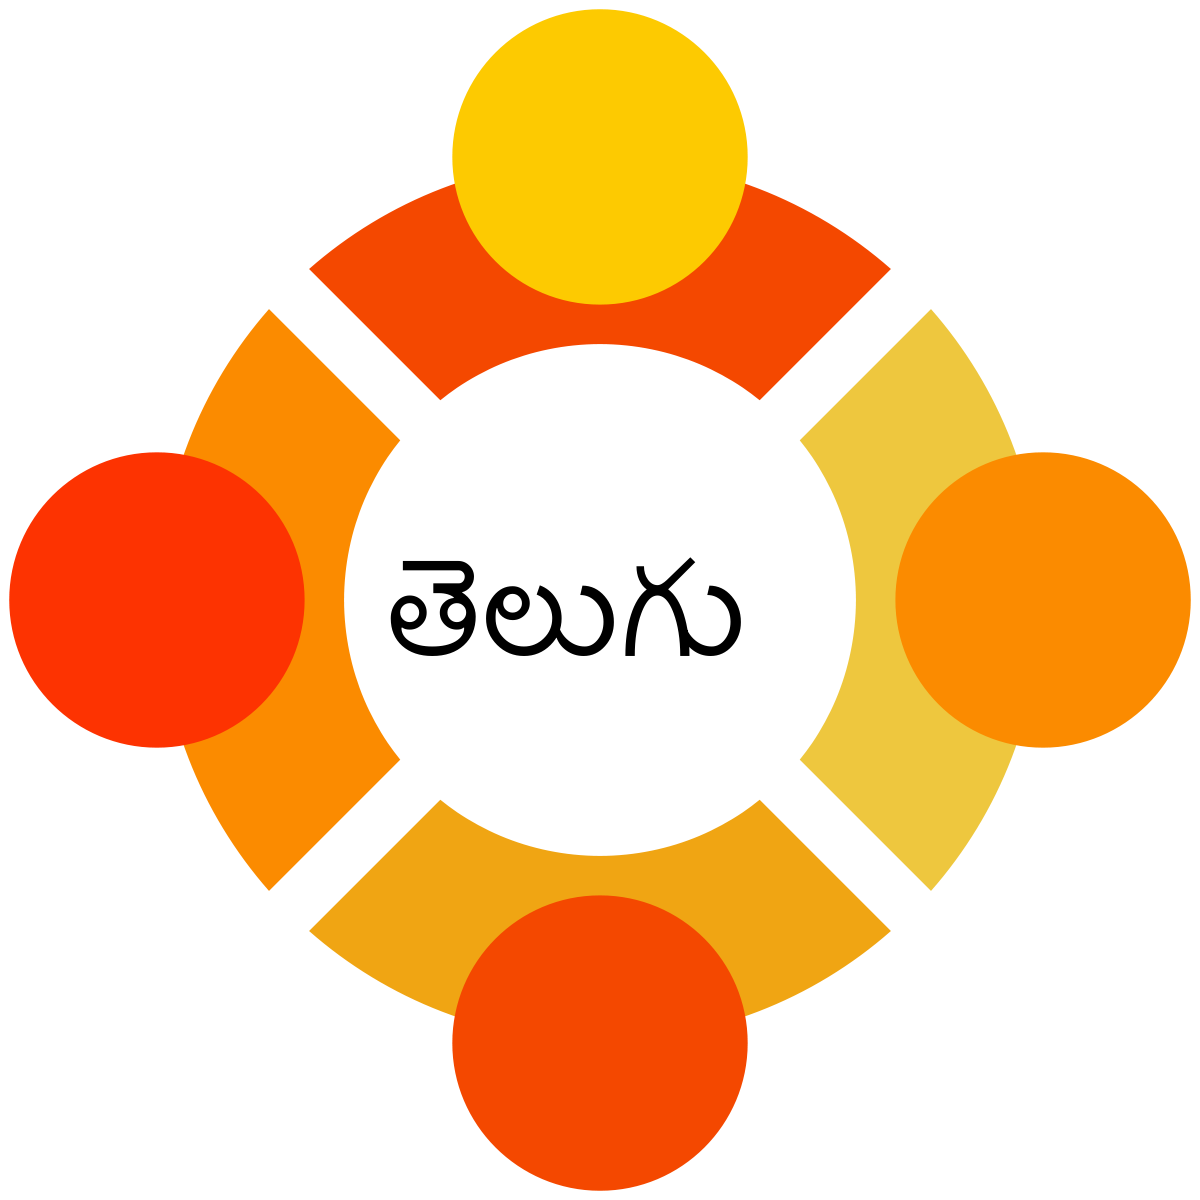 Ubuntu Logo PNG HD Quality